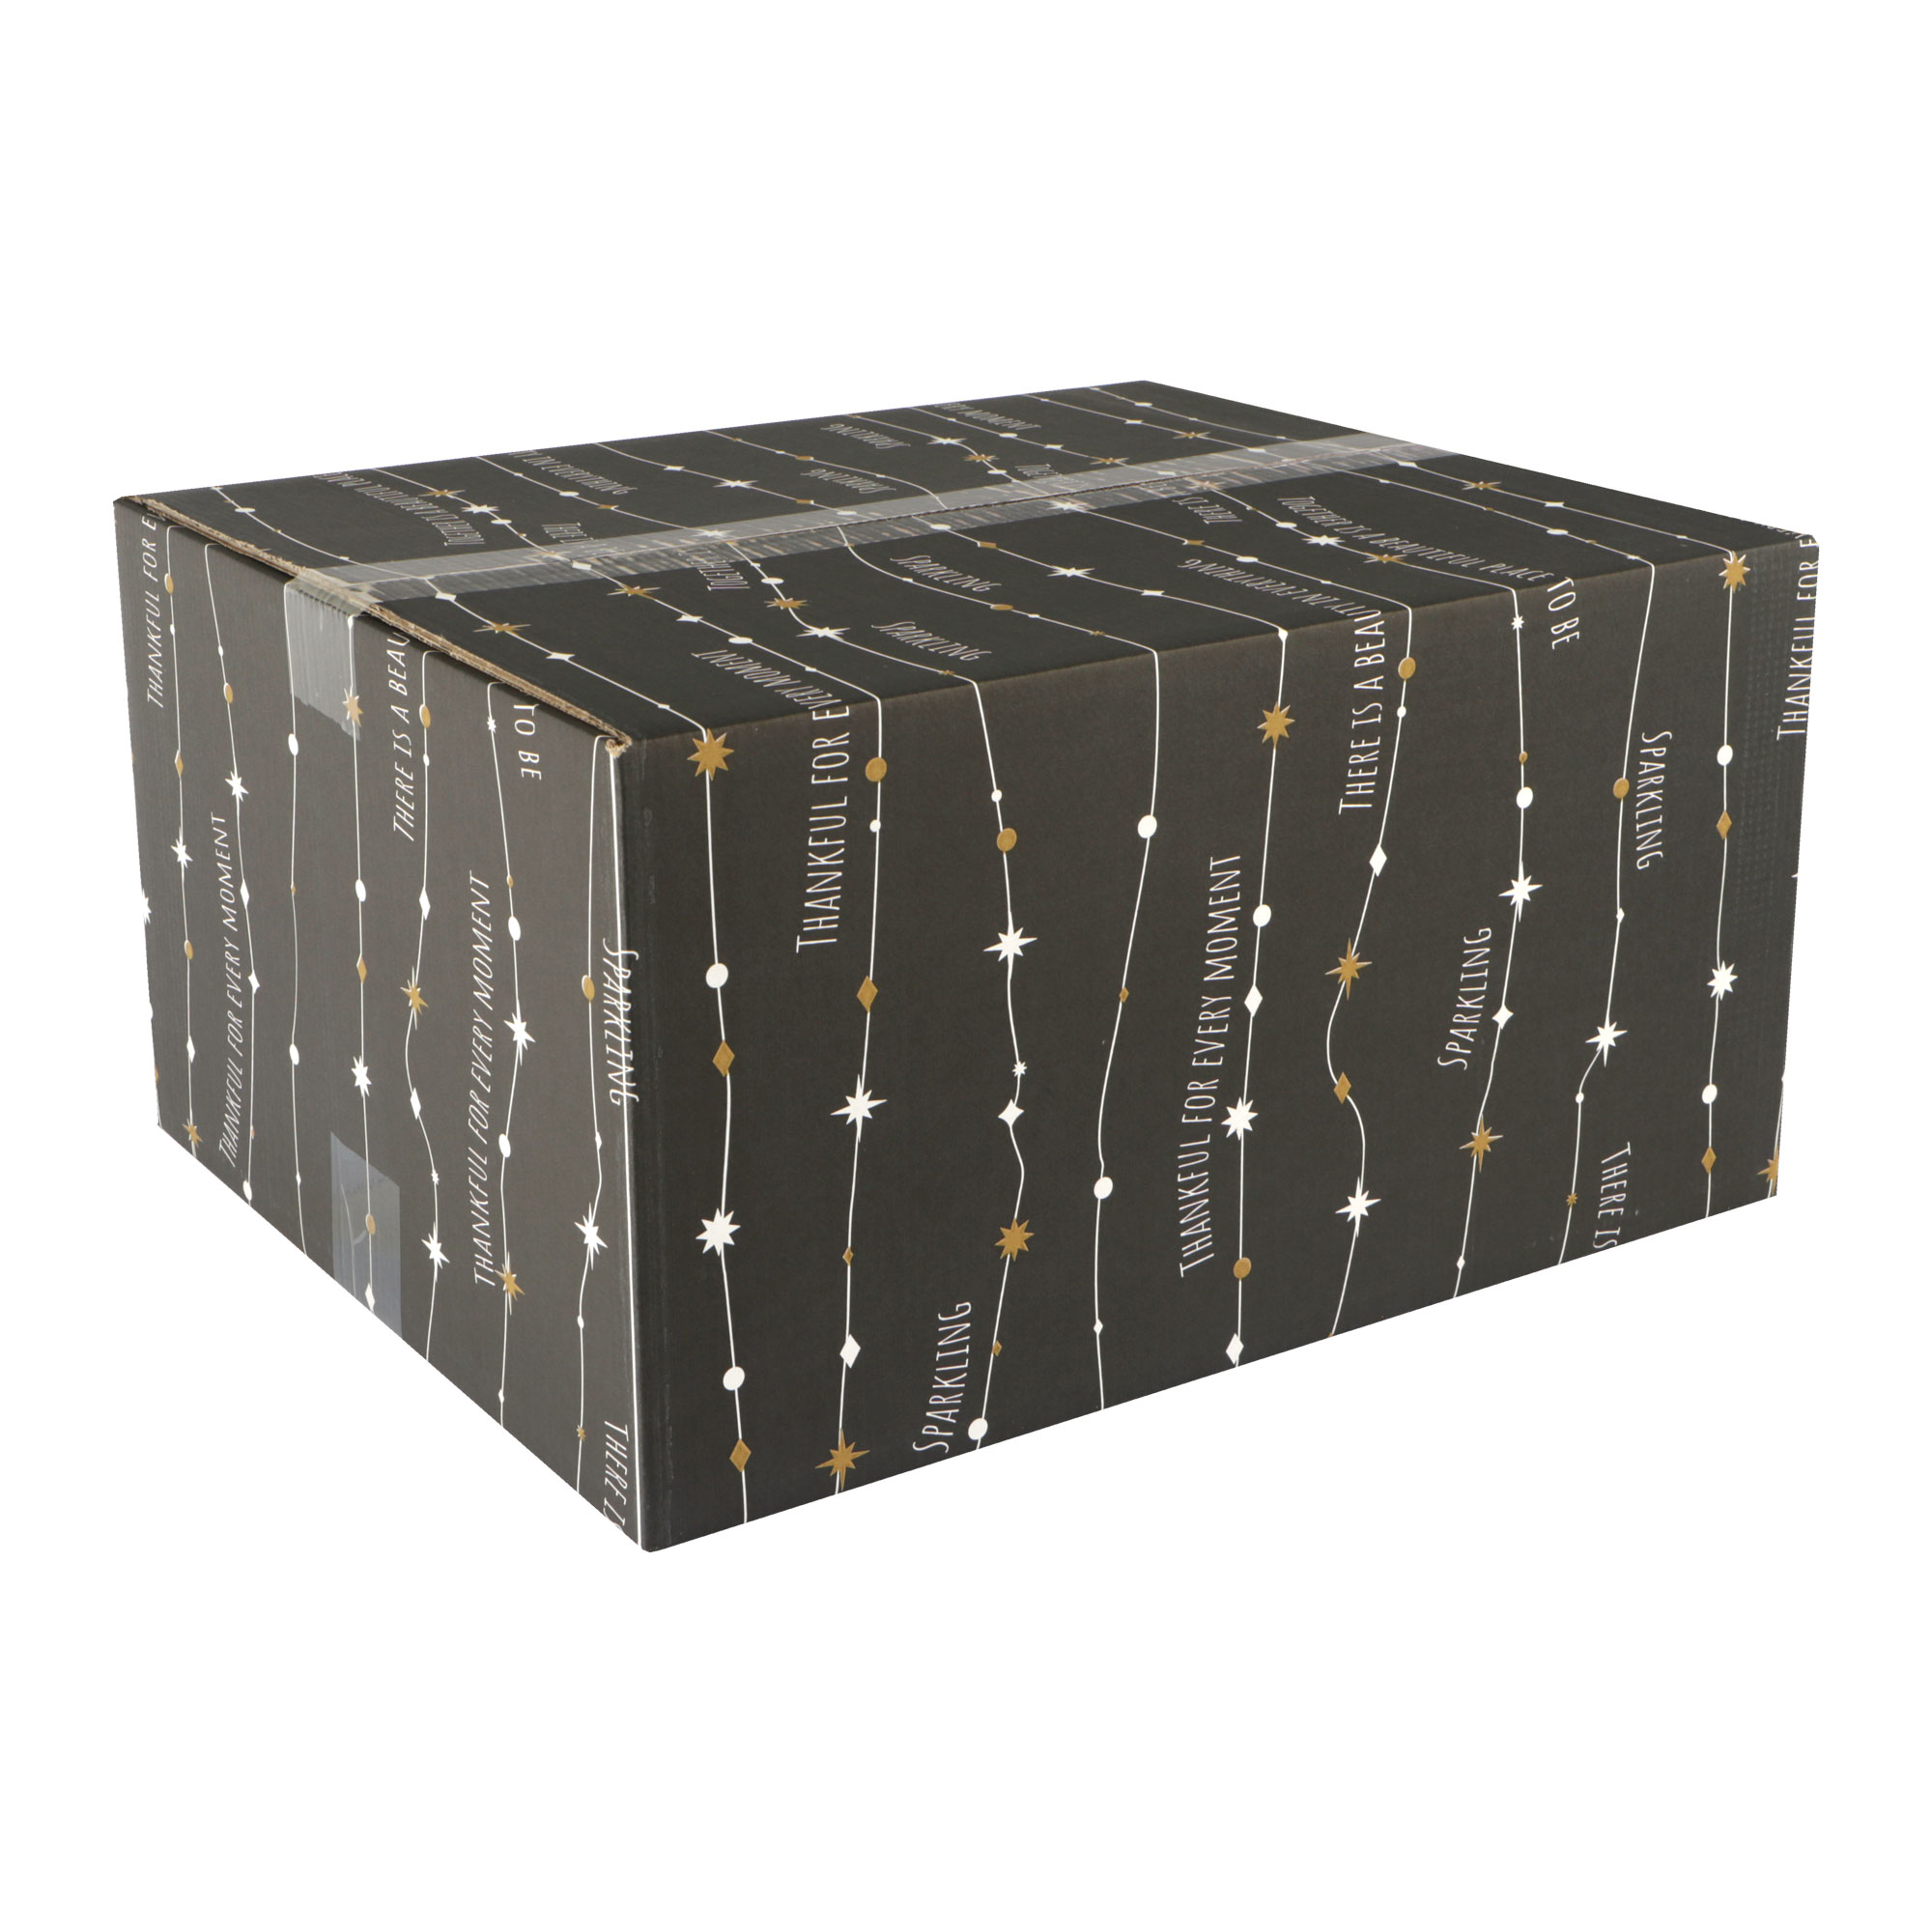 Picture of Kerstdoos D230 Sparkling 45x35x23 cm zwart/goud/wit